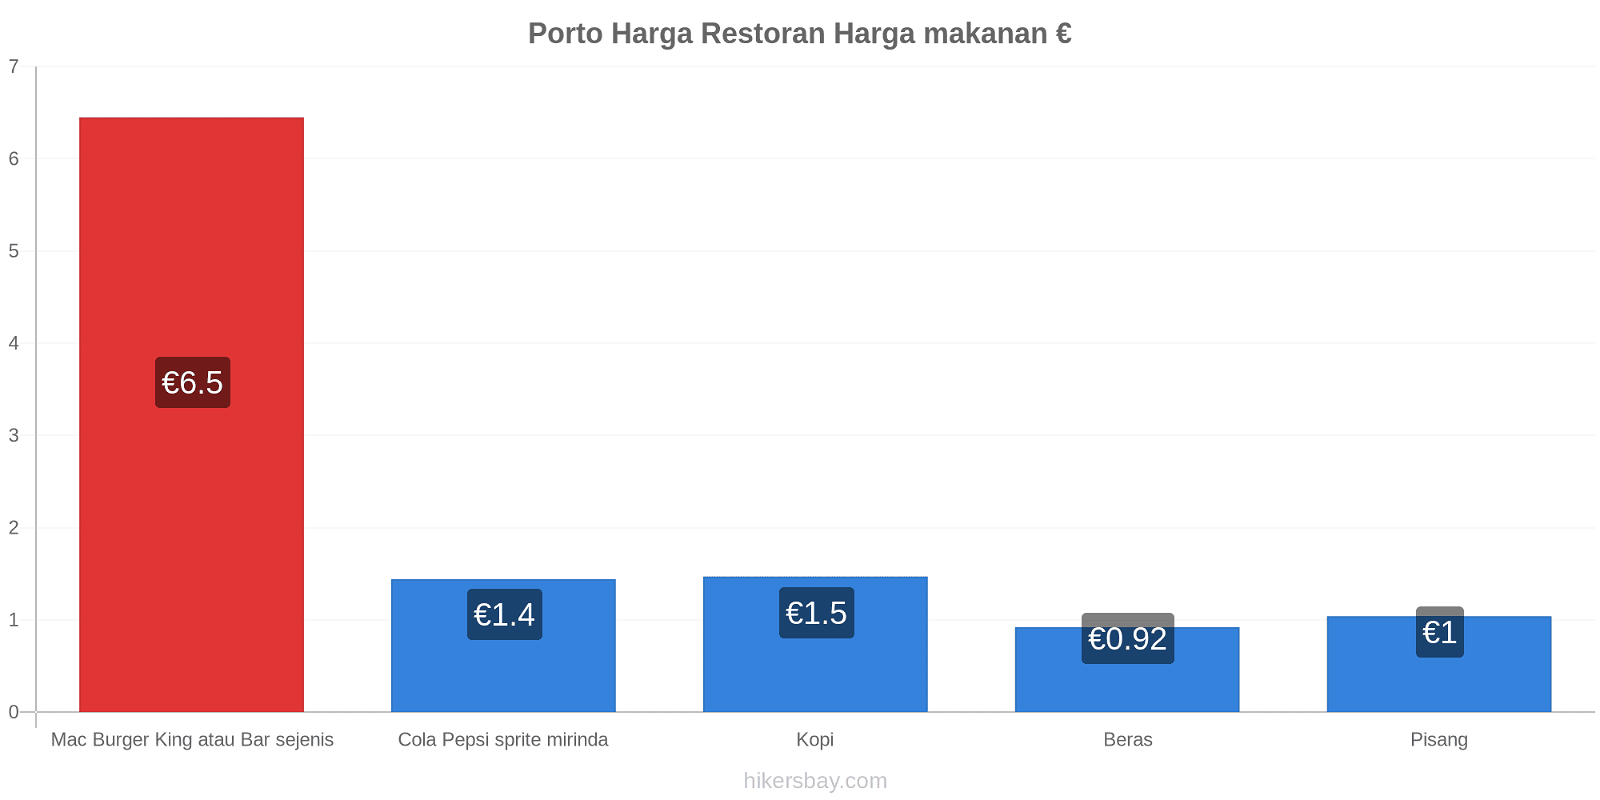 Porto perubahan harga hikersbay.com